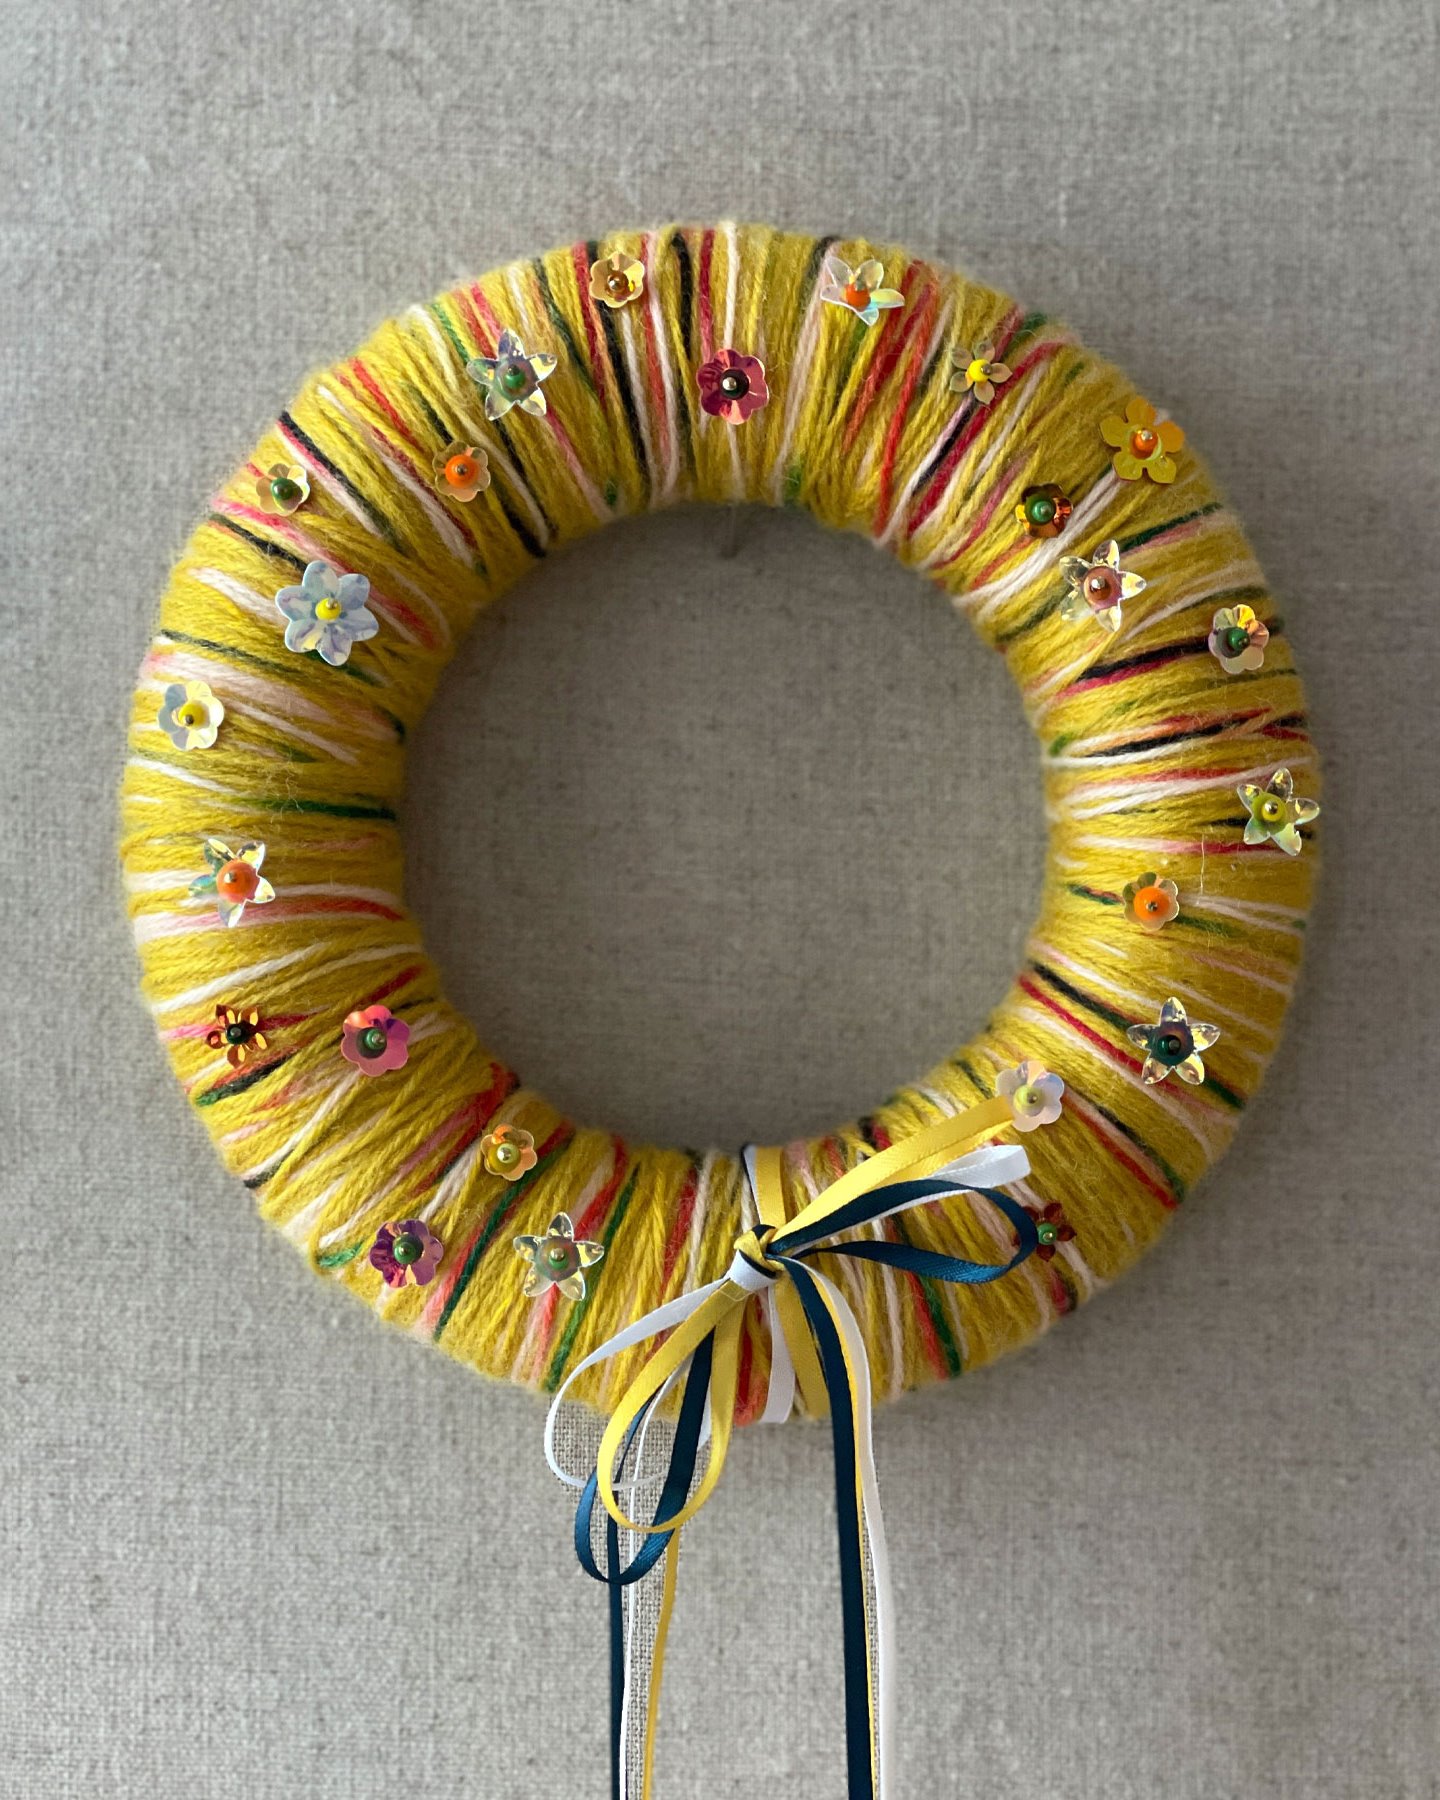 DIY: Yarn-wrapped Easter wreath DIY4308-Image.jpg